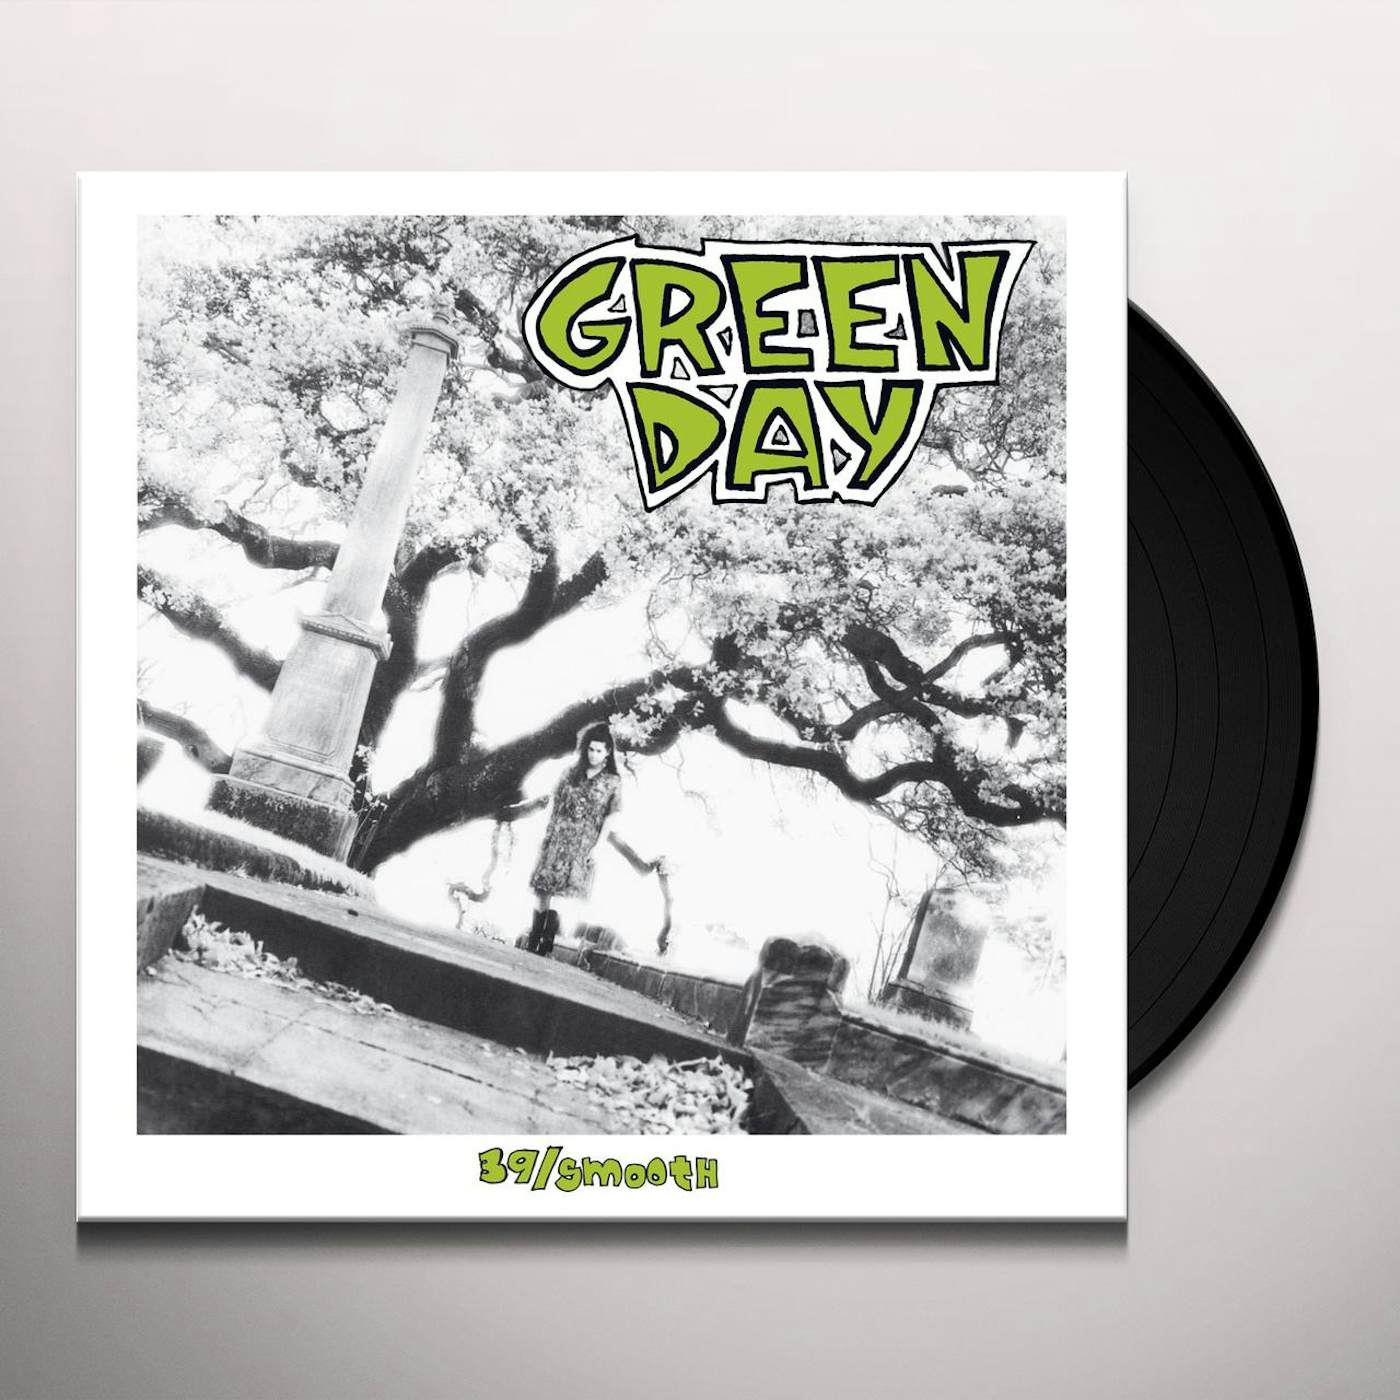 39/Smooth Vinyl Record - Green Day